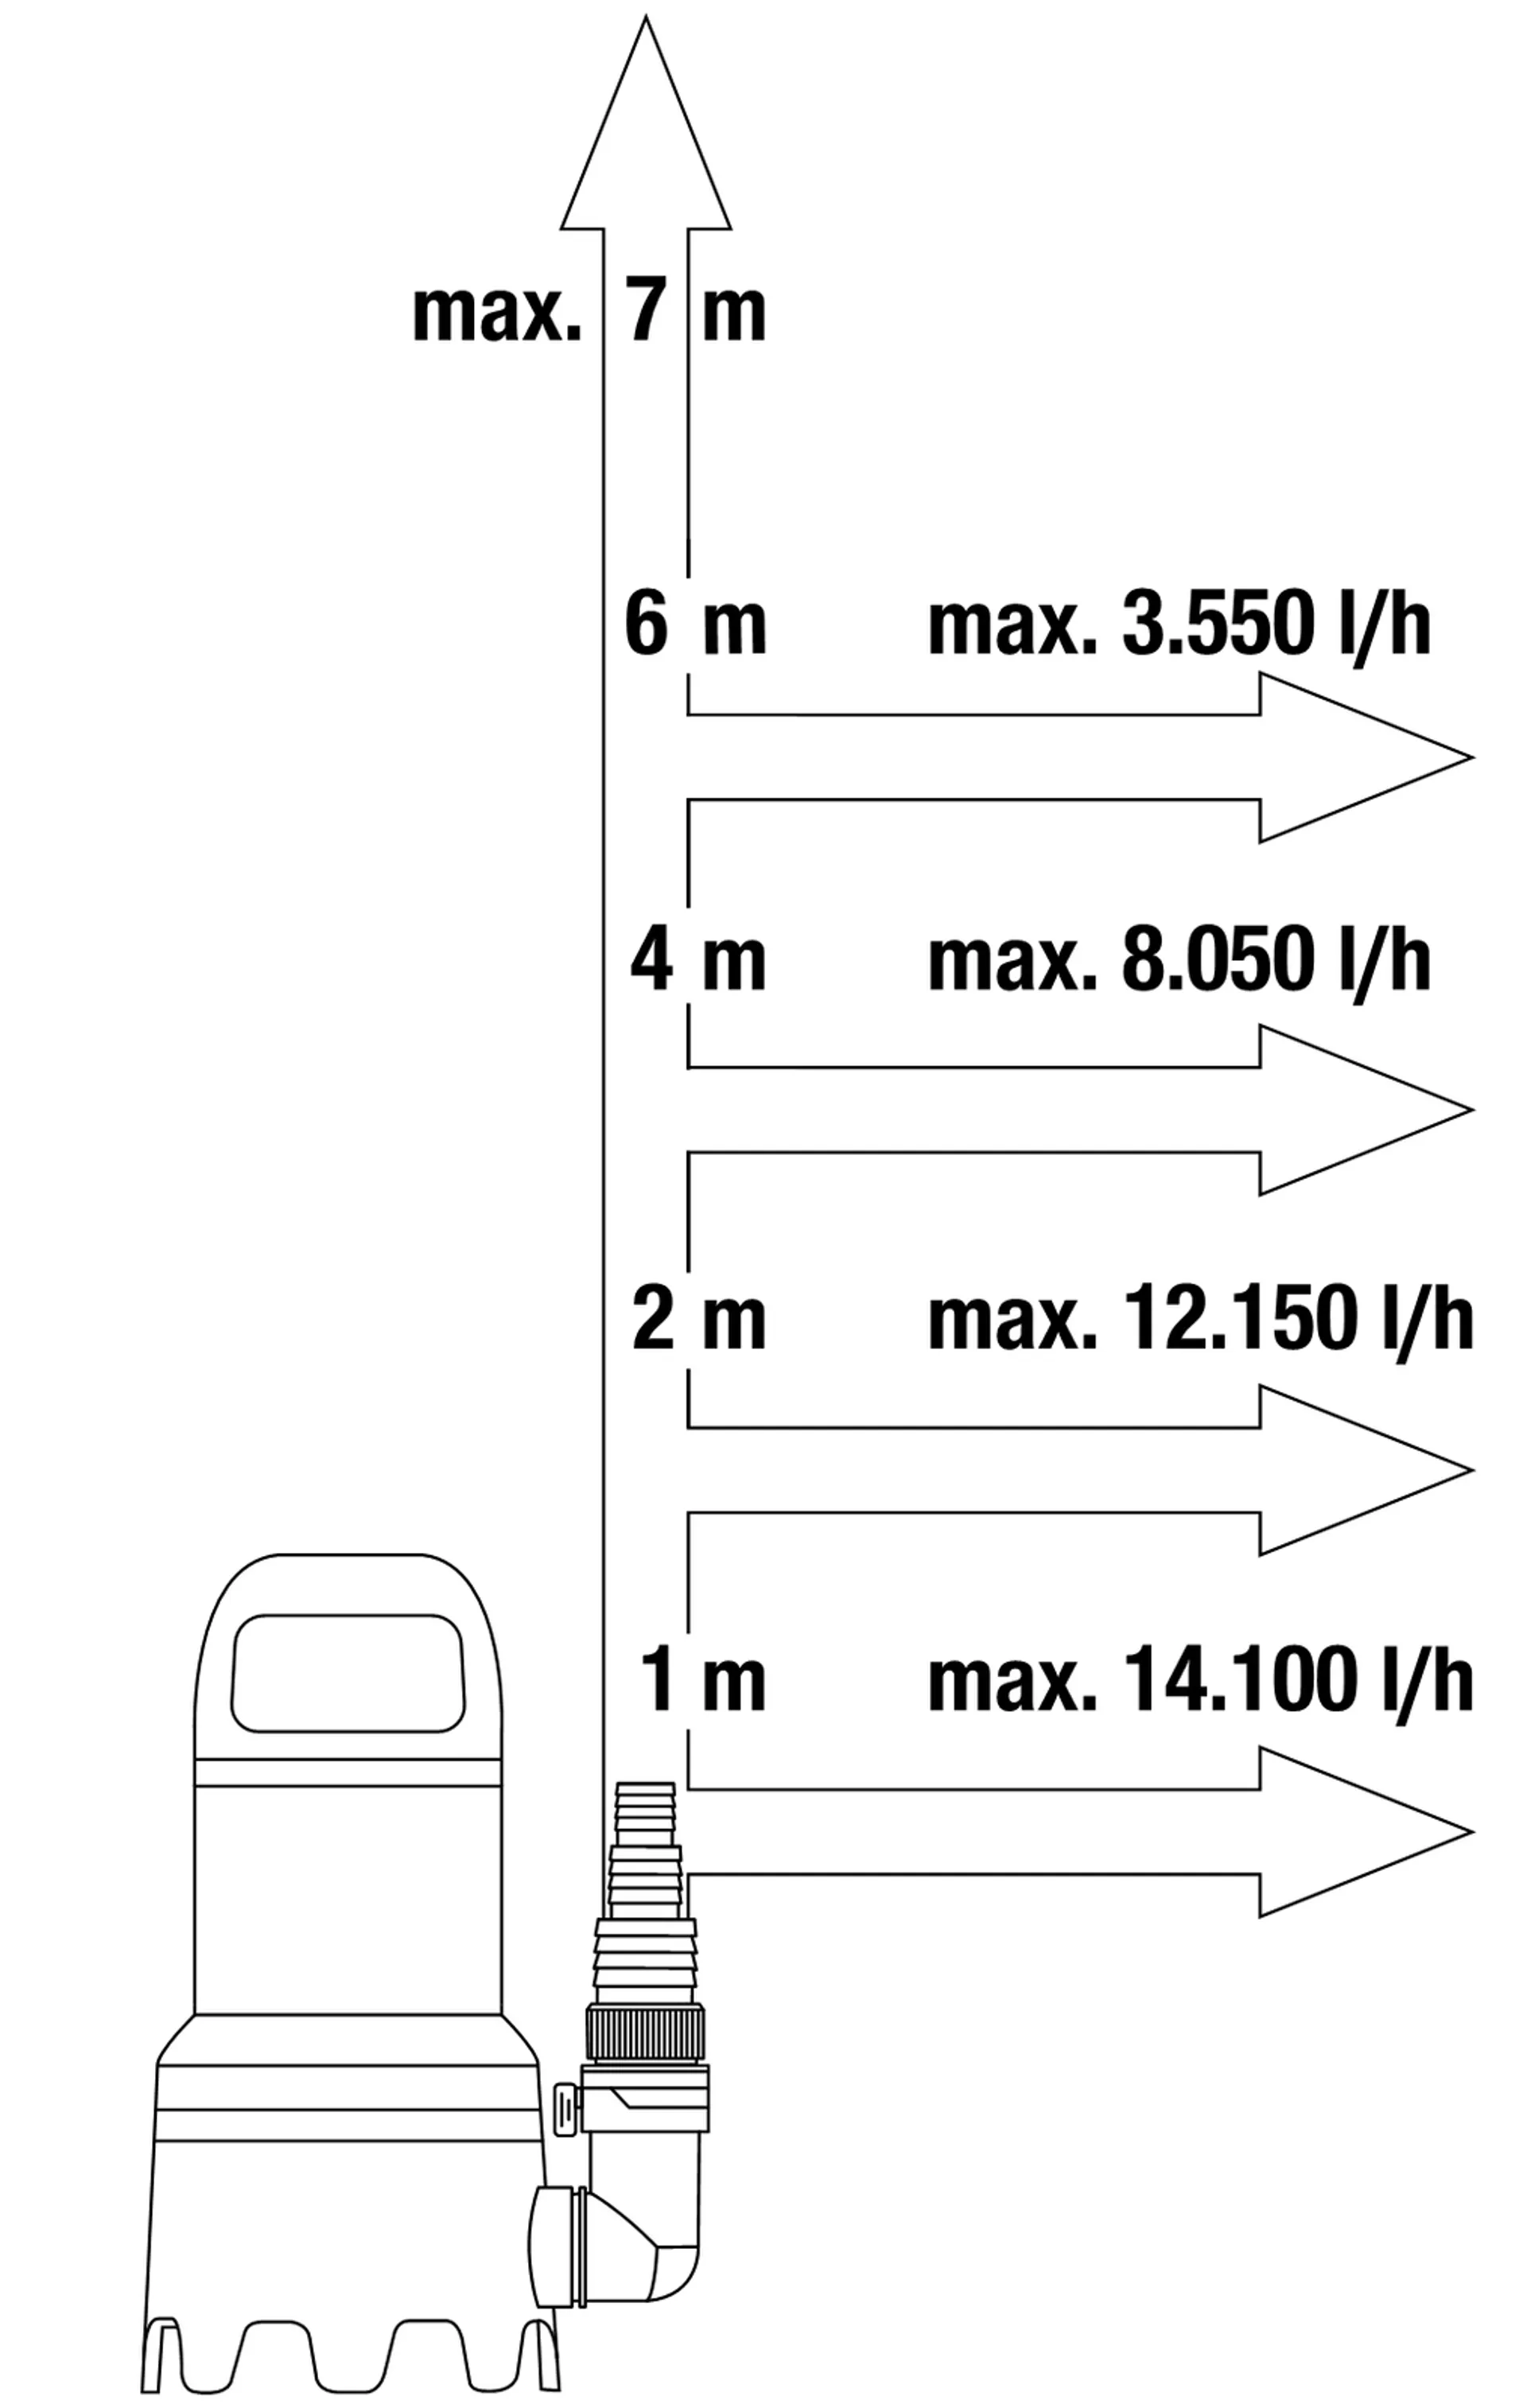 Uppopumppu 16 000 likaiselle vedelle450 W, 9000 l/h, 0,7 bar, partikkelikoko 35 mm. - 4